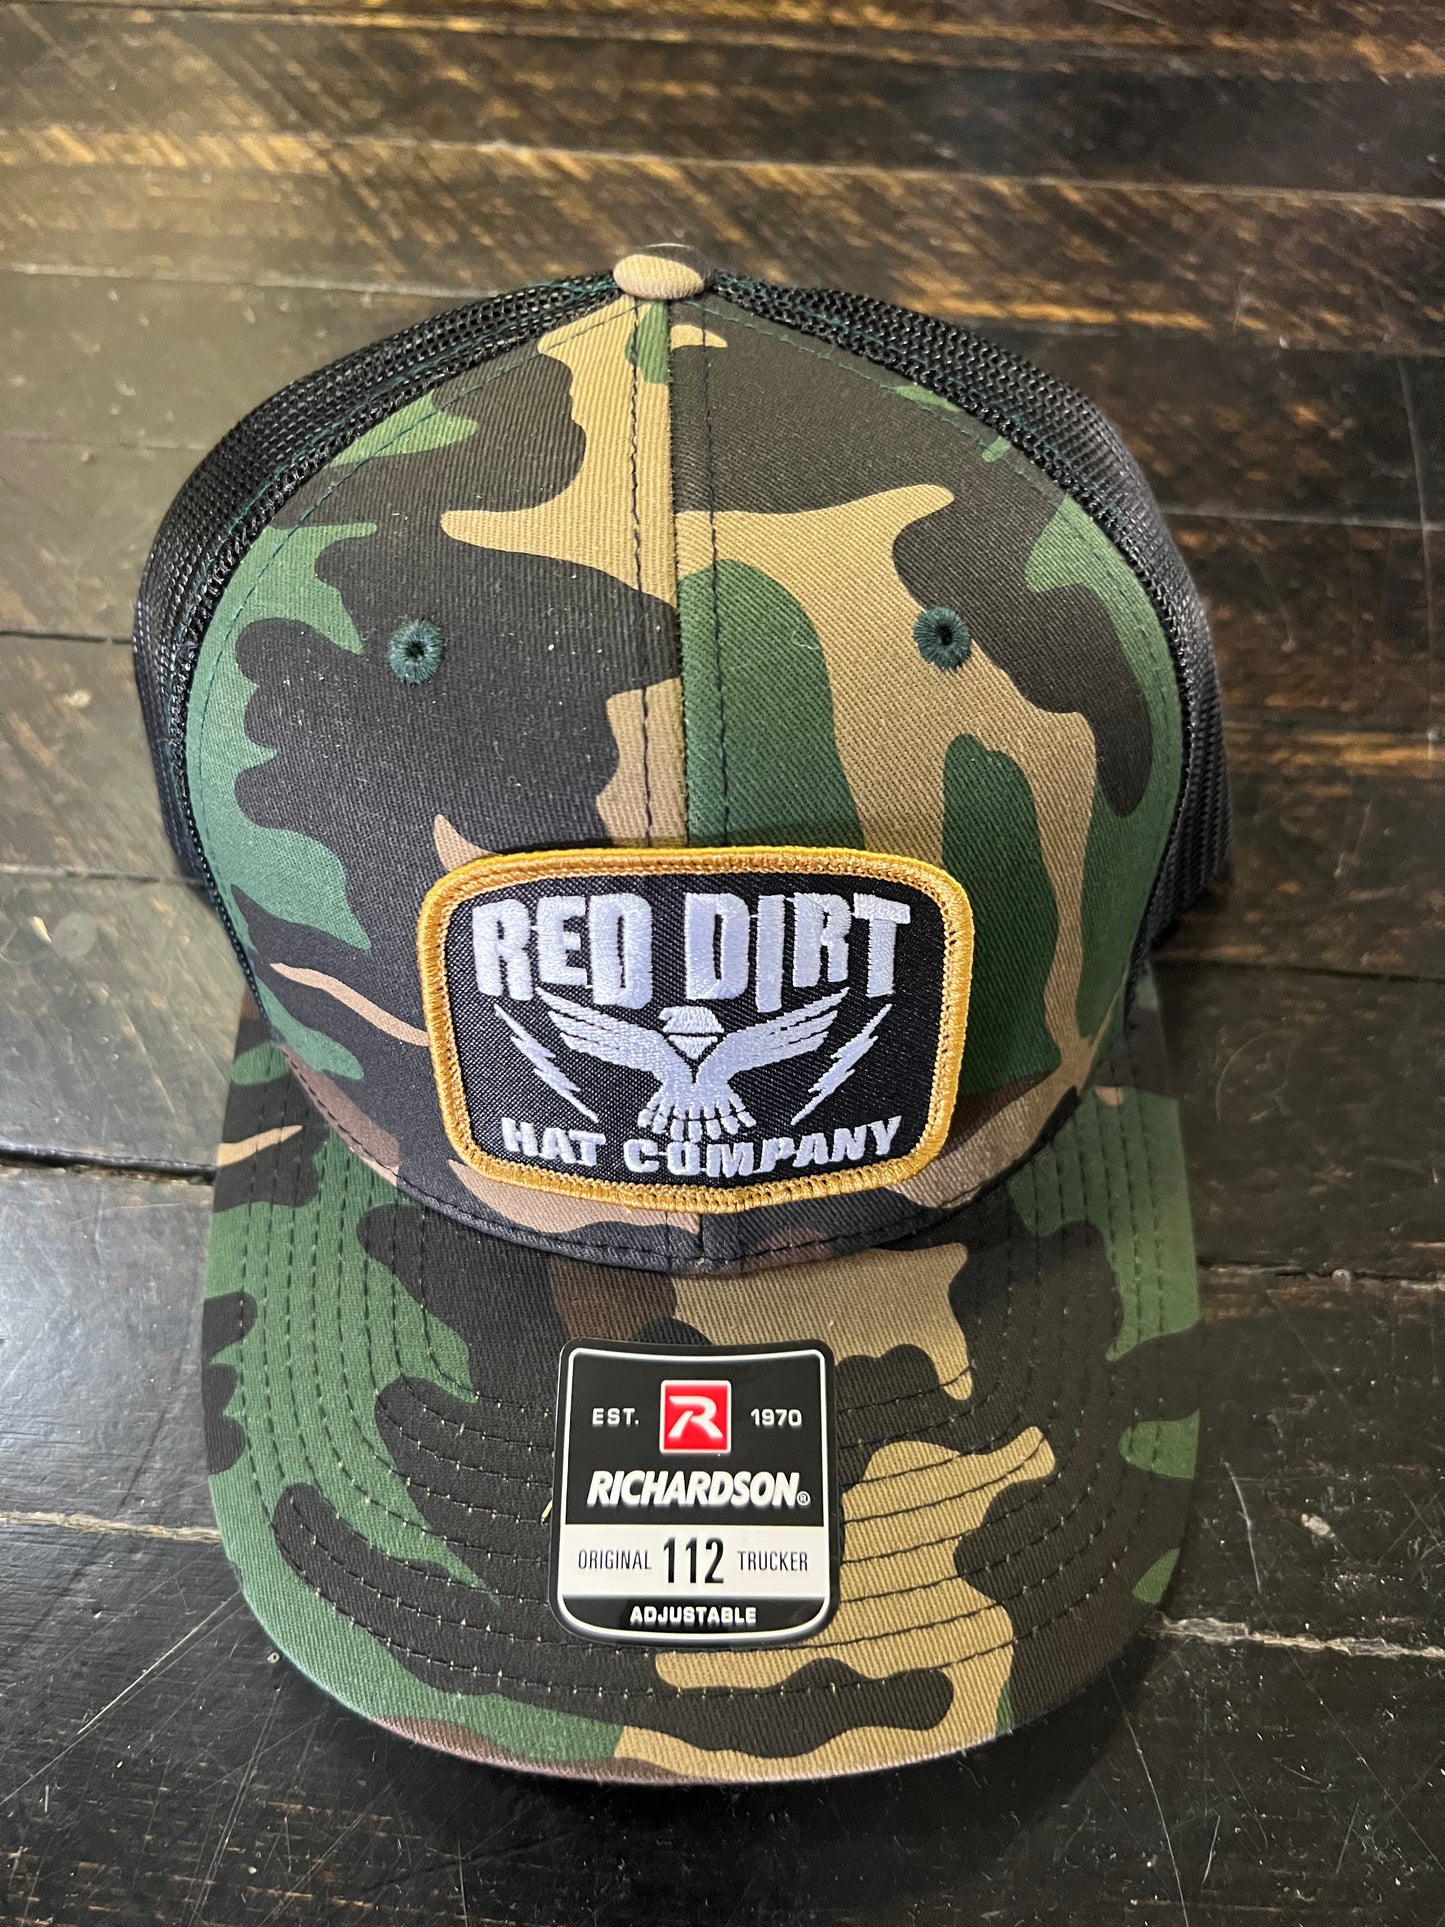 The Luke Camo Red Dirt Hat